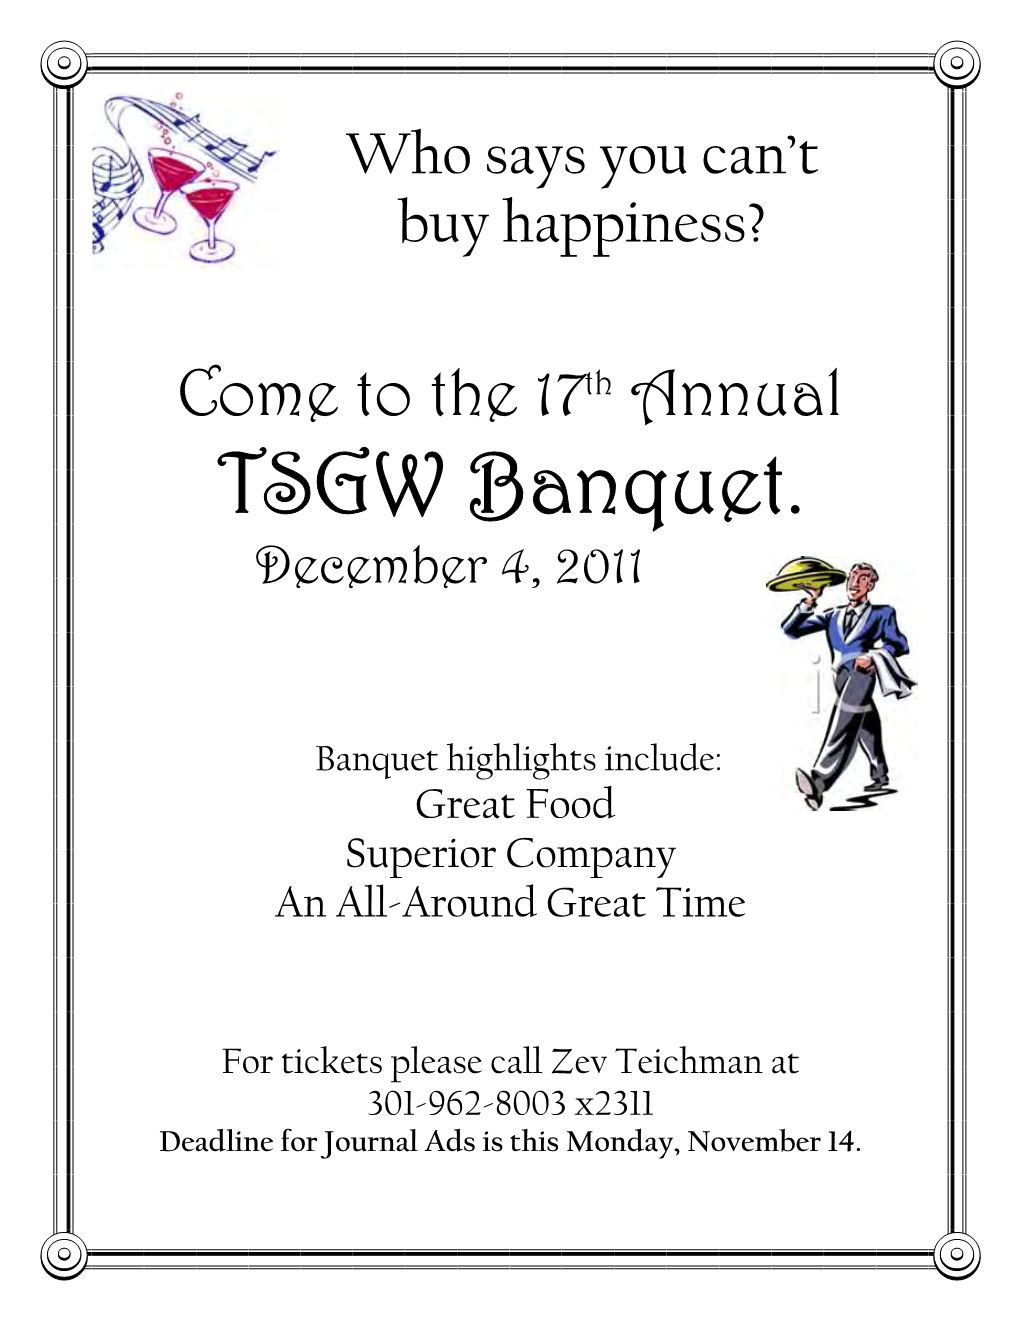 TSGW Banquet. December 4, 2011